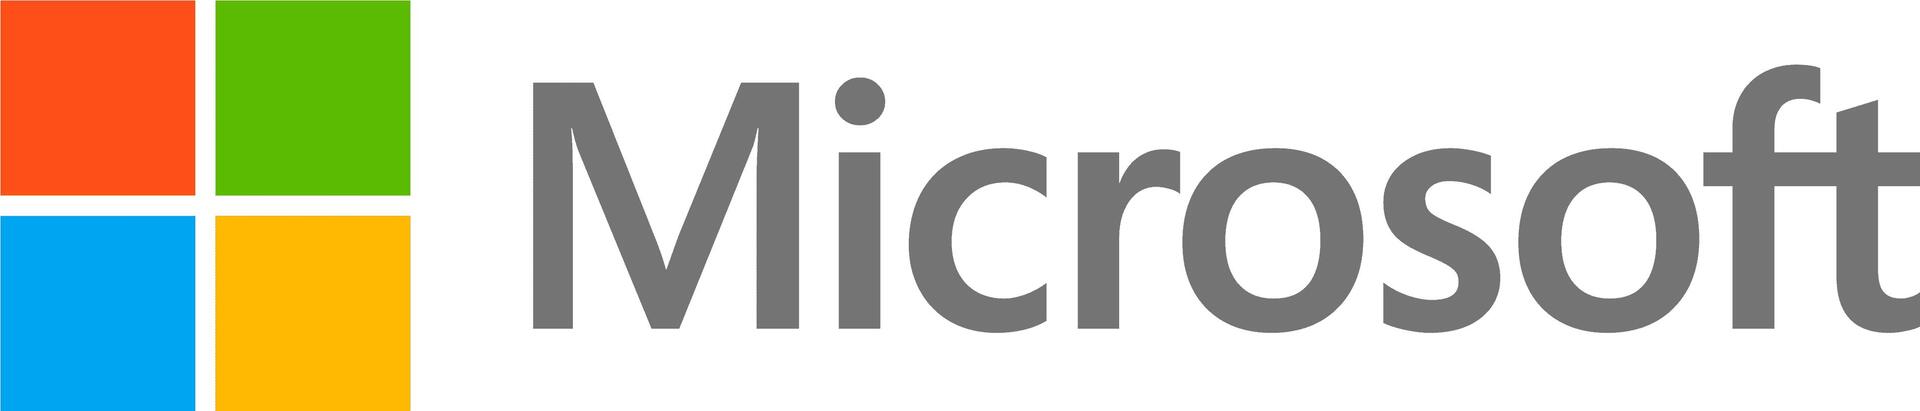 Microsoft DG7GMGF0M80J-0002 Software-Lizenz/-Upgrade 1 Lizenz(en) (DG7GMGF0M80J-0002)